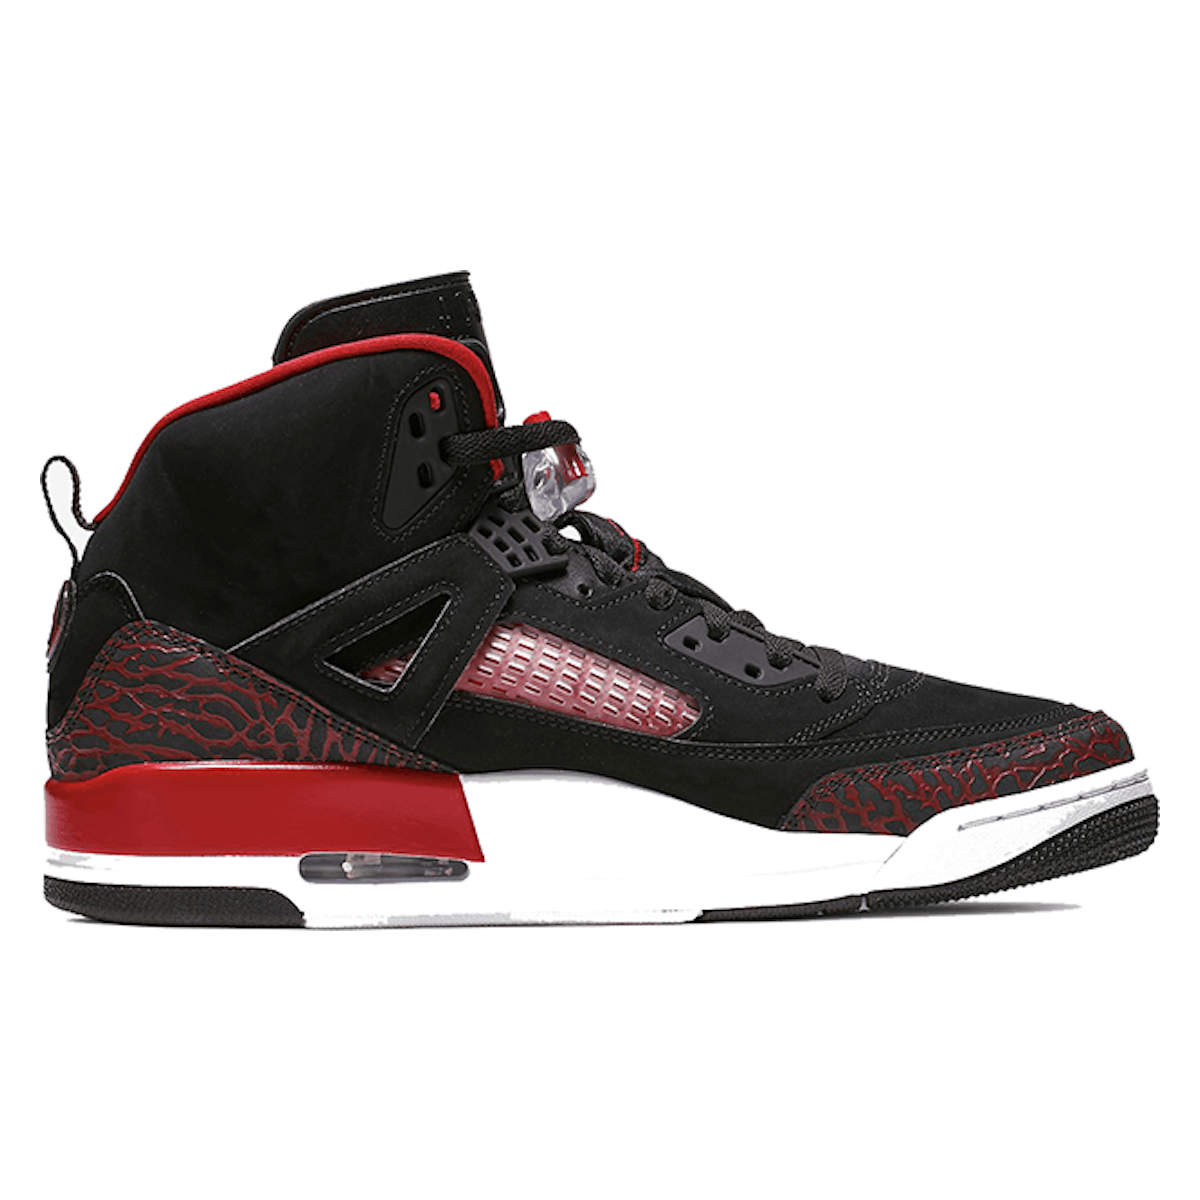 Air Jordan Spiz'ike "Black/University Red"